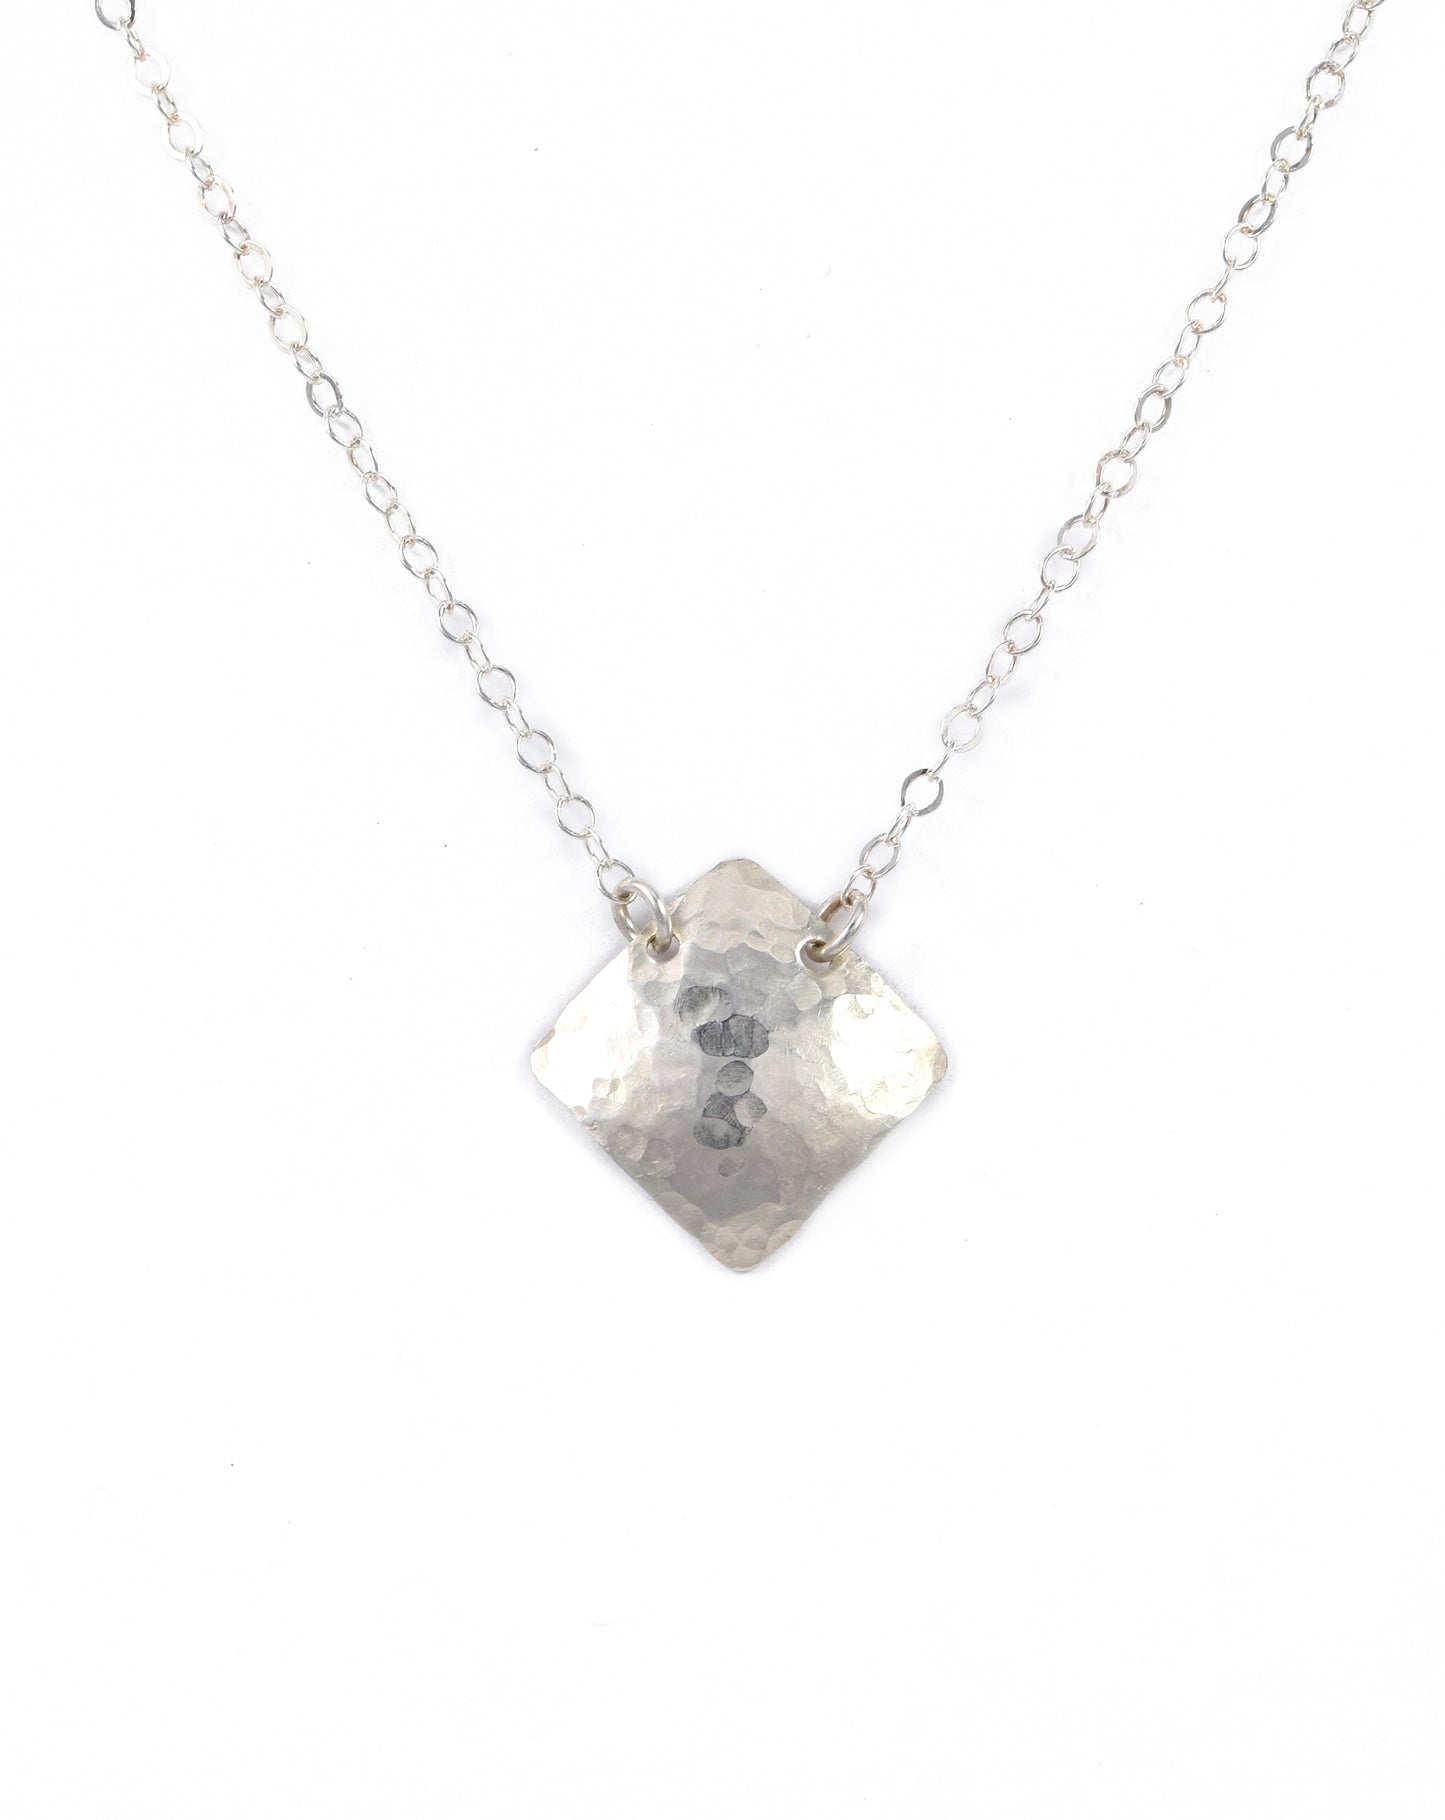 Cadence Silver Diamond Necklace